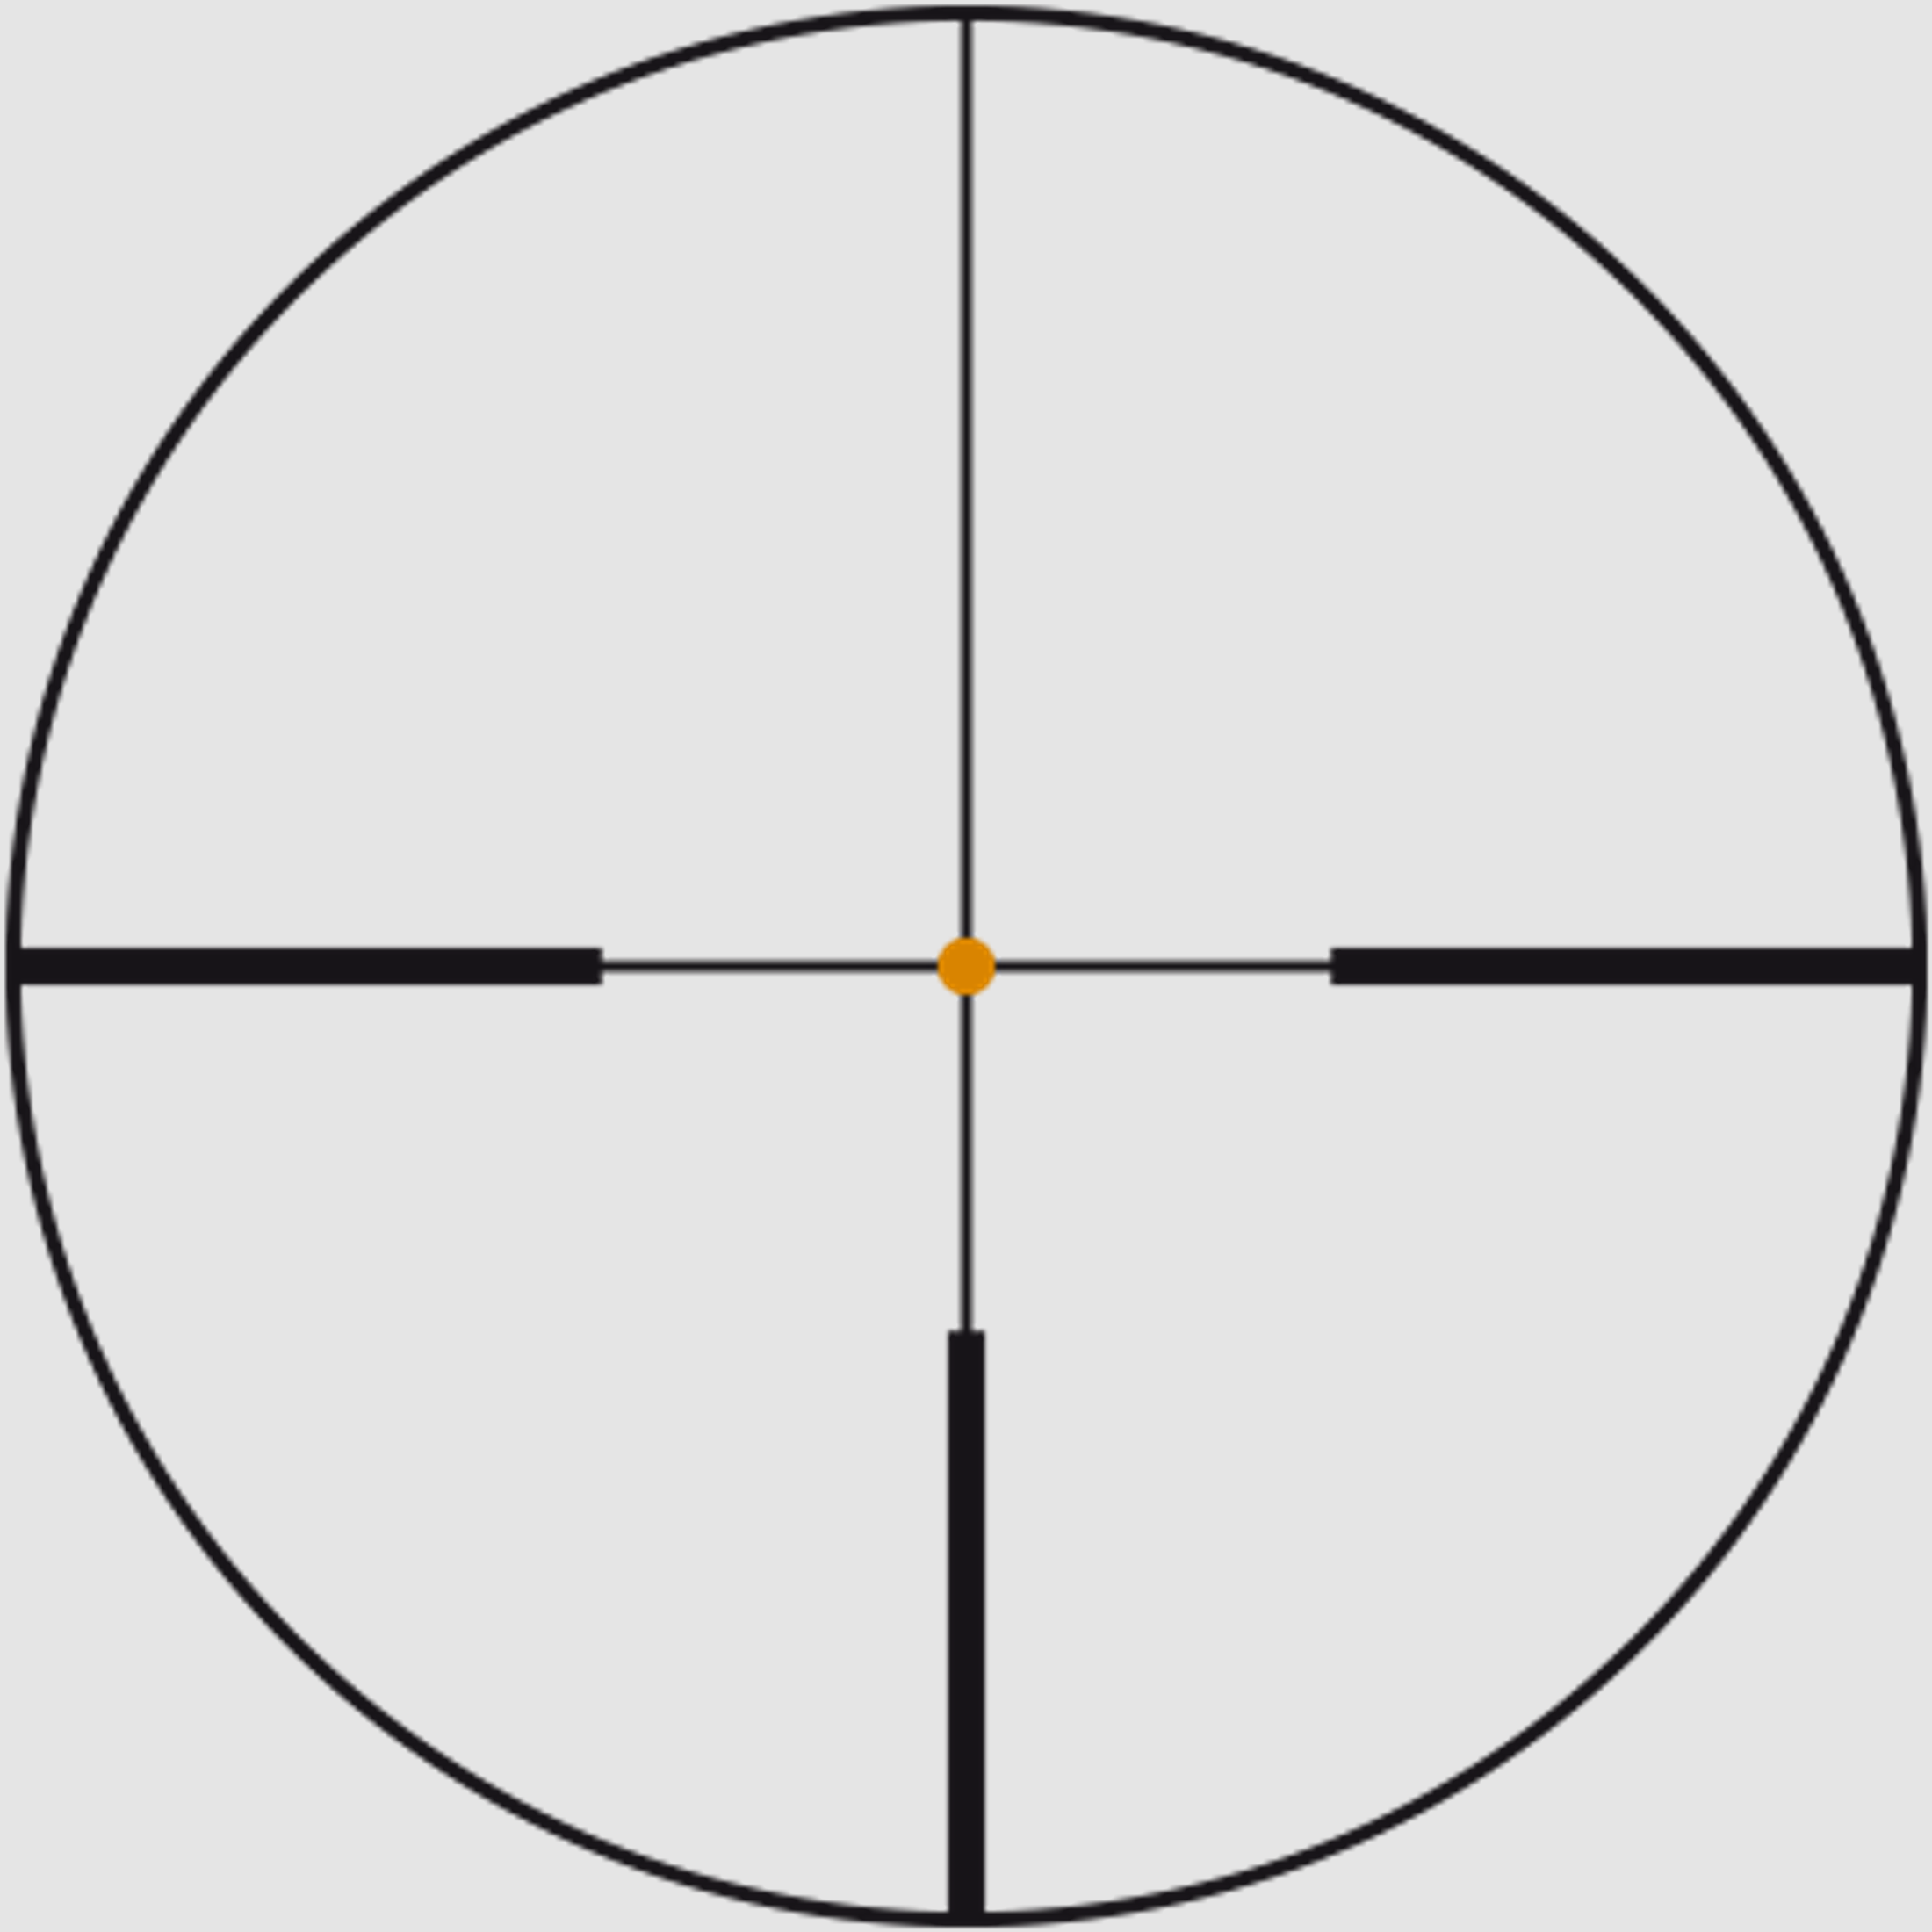 SWAROVSKI Zielfernrohr mit Leuchtabsehen 1,7-13,3x42 P Z8i L (30mm) Abs. 4A-I/4A-300I